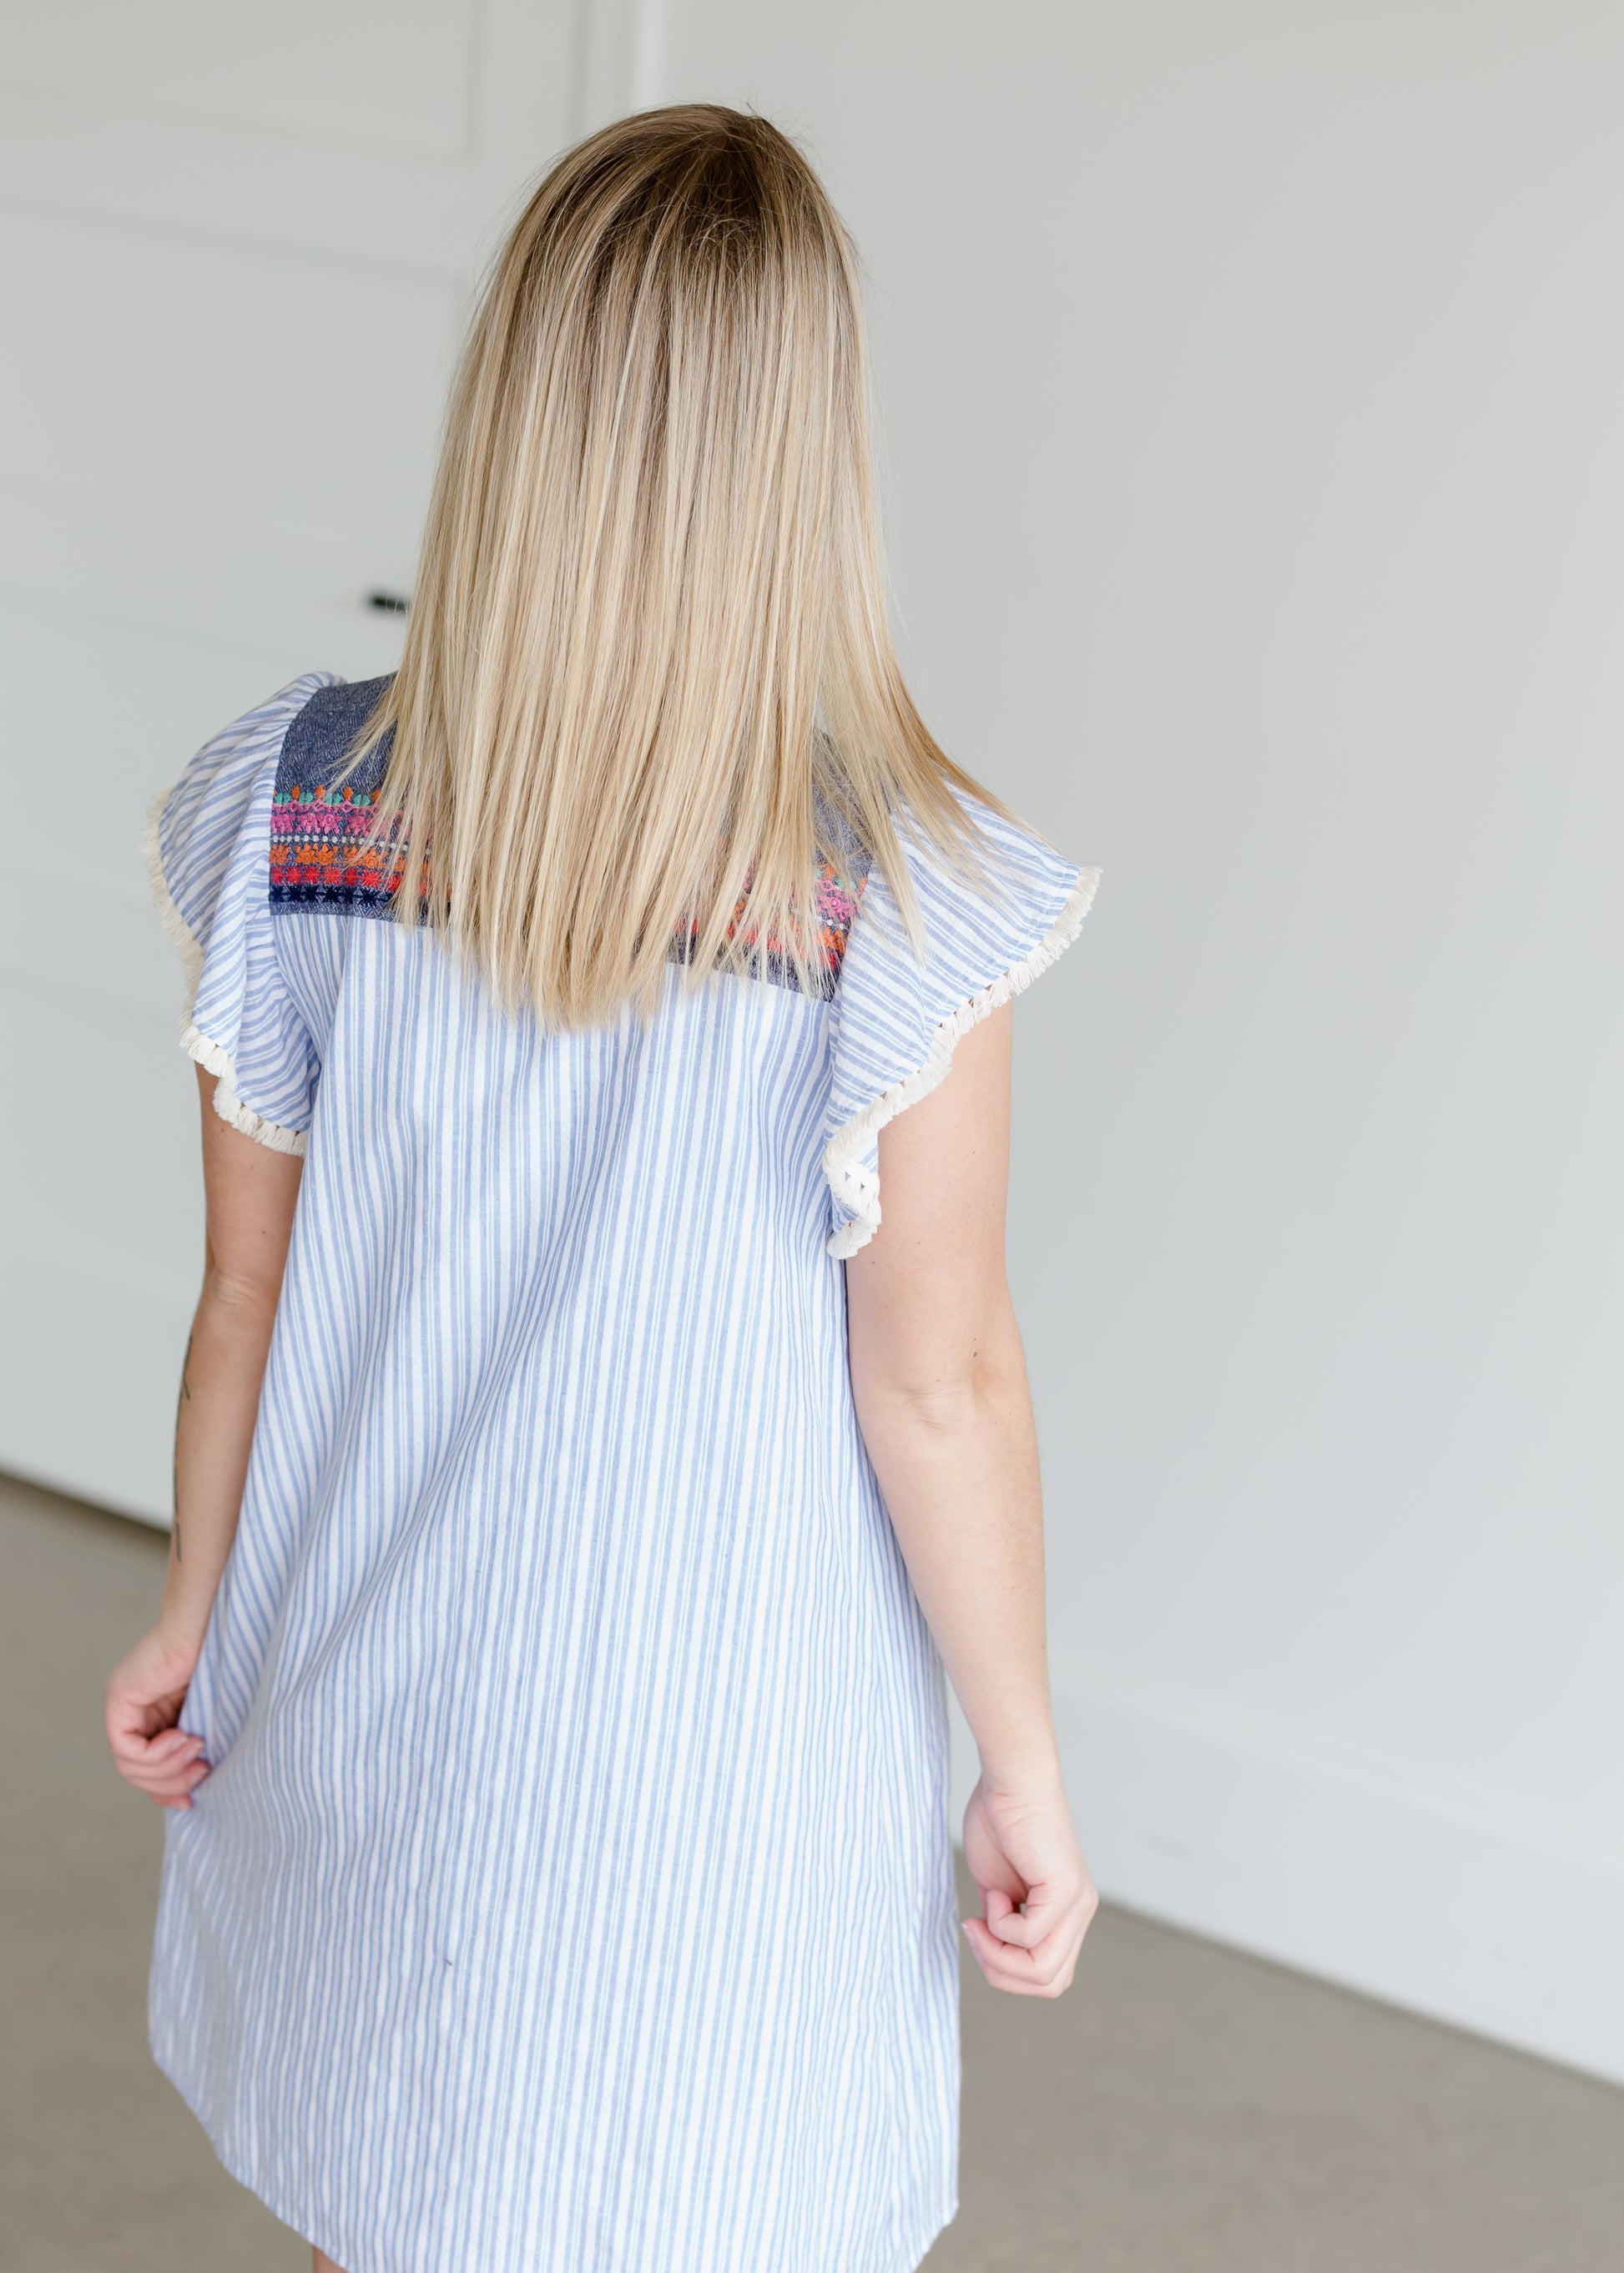 Blue Striped Embroidered Midi Dress - FINAL SALE Dresses